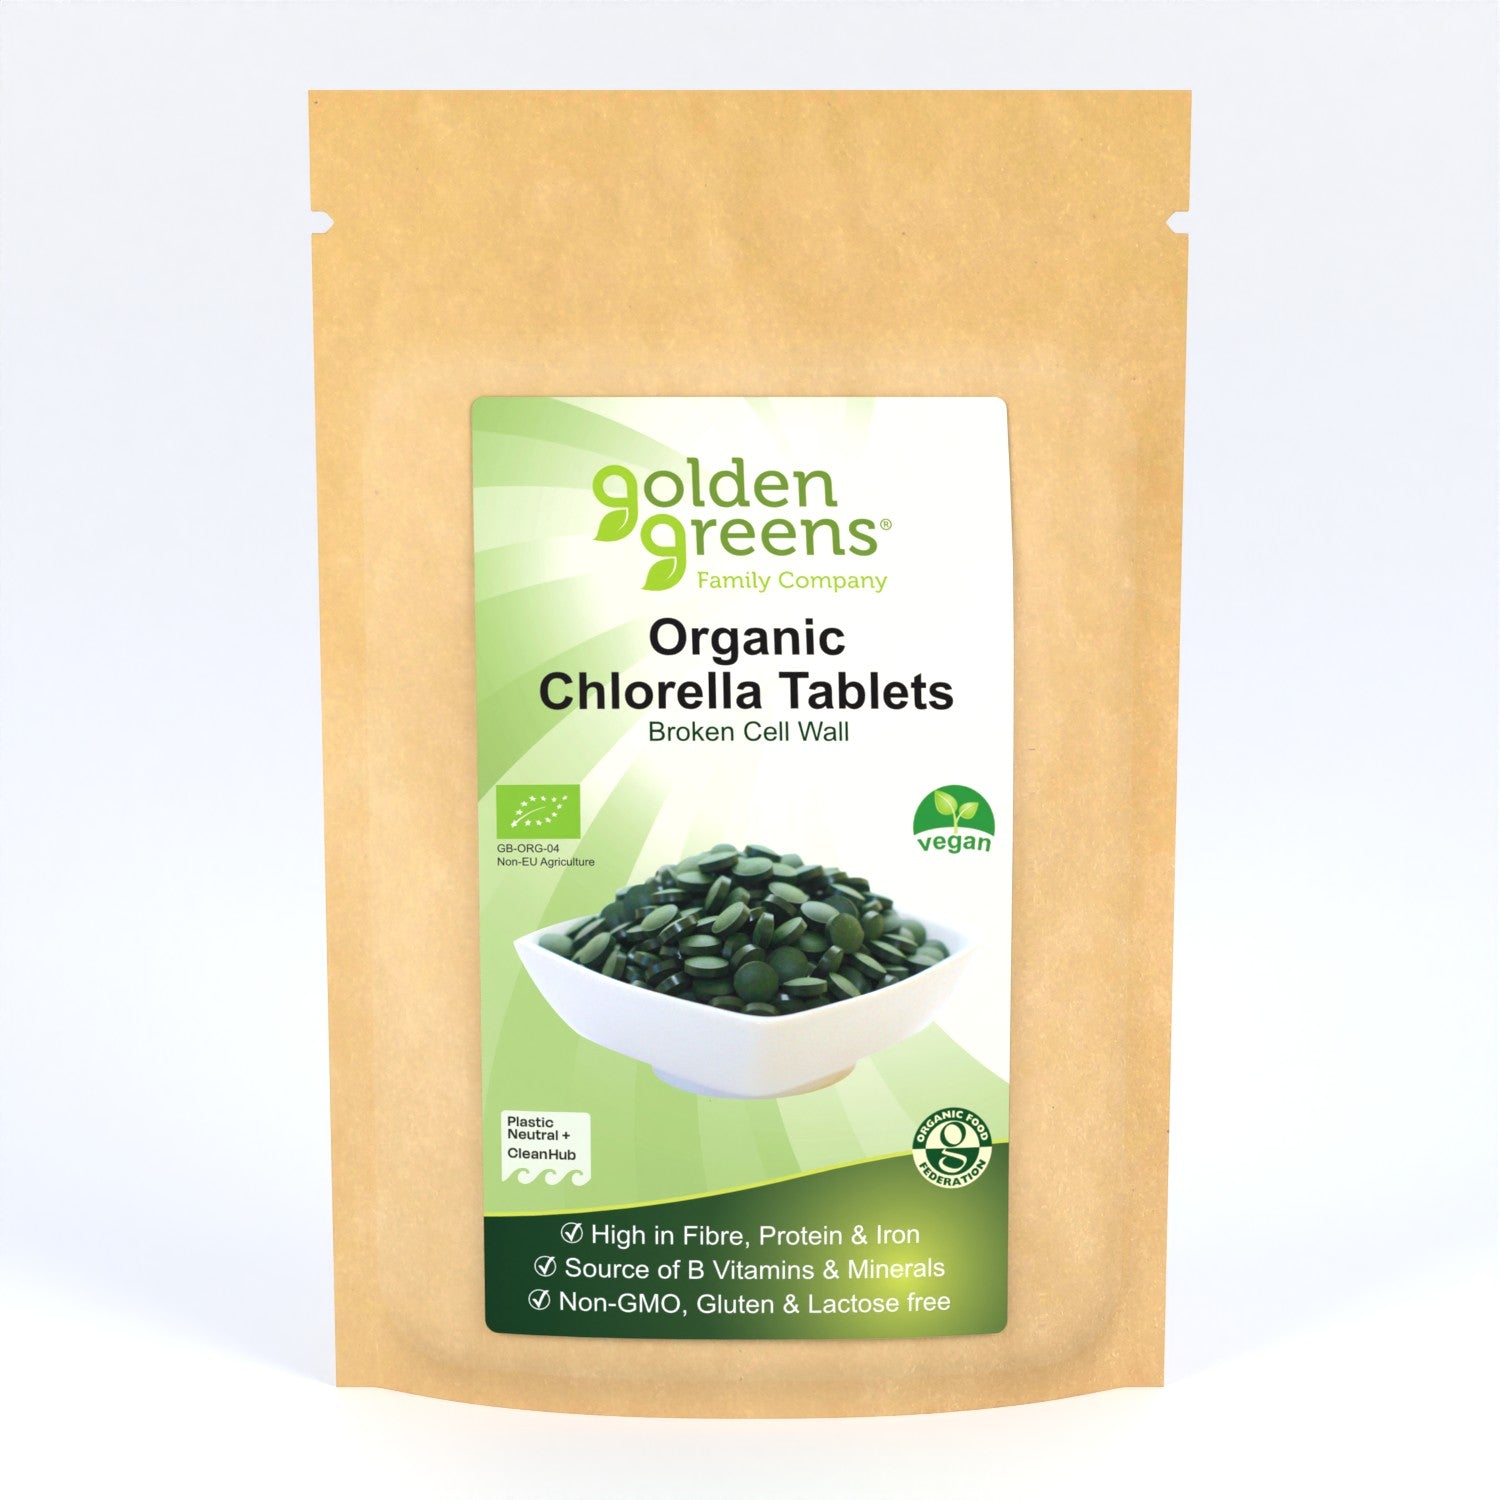 View Organic Chlorella Tablets 500mg information